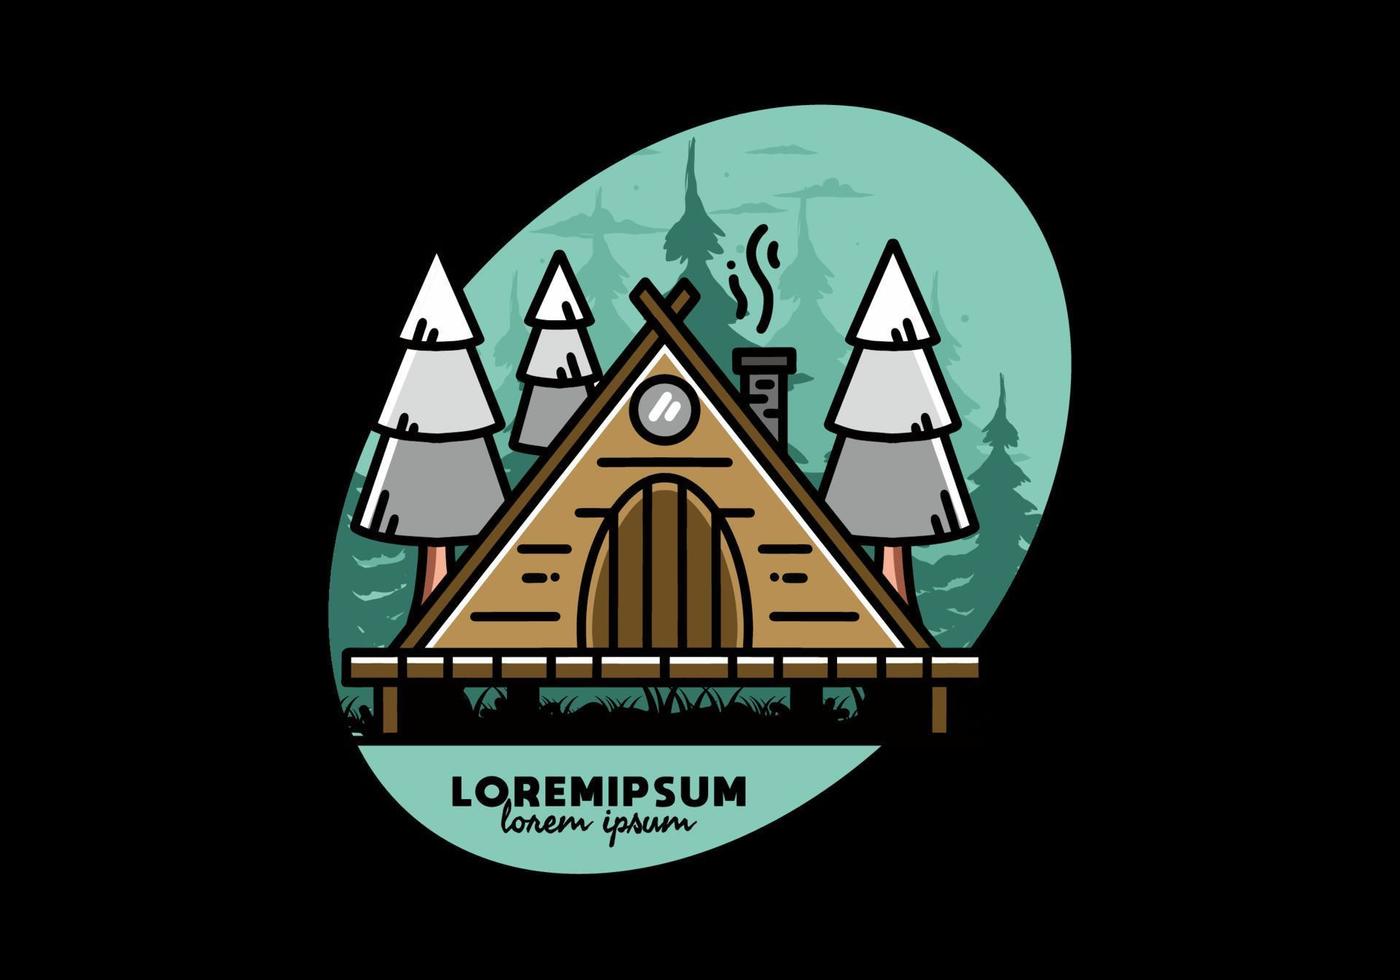 cabaña de madera triangular entre diseño de ilustración de árboles de pino vector